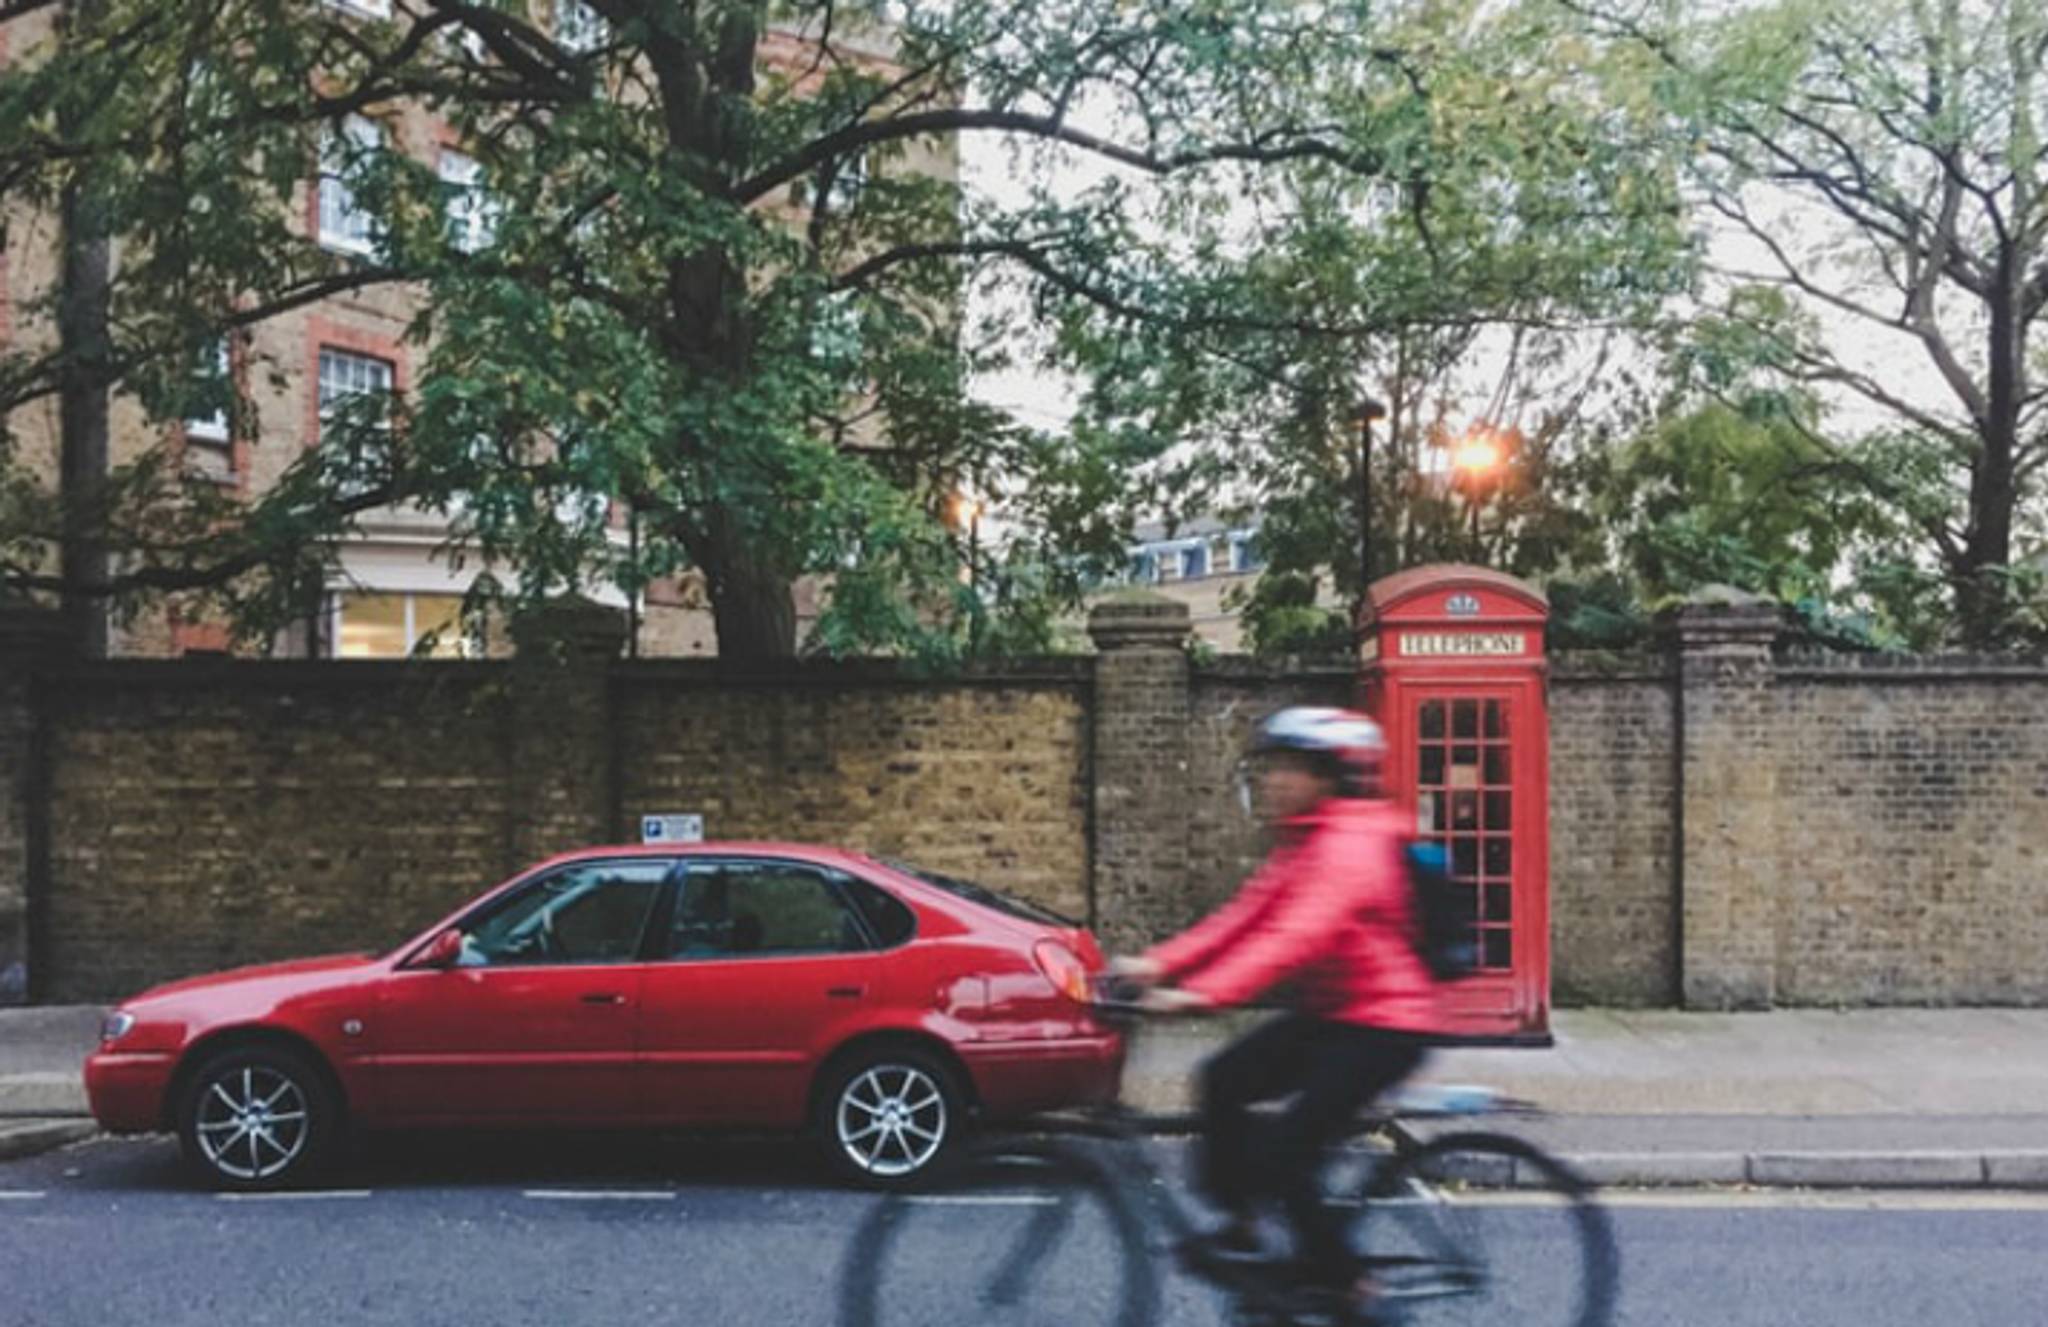 Car-free London encourages sustainable travel